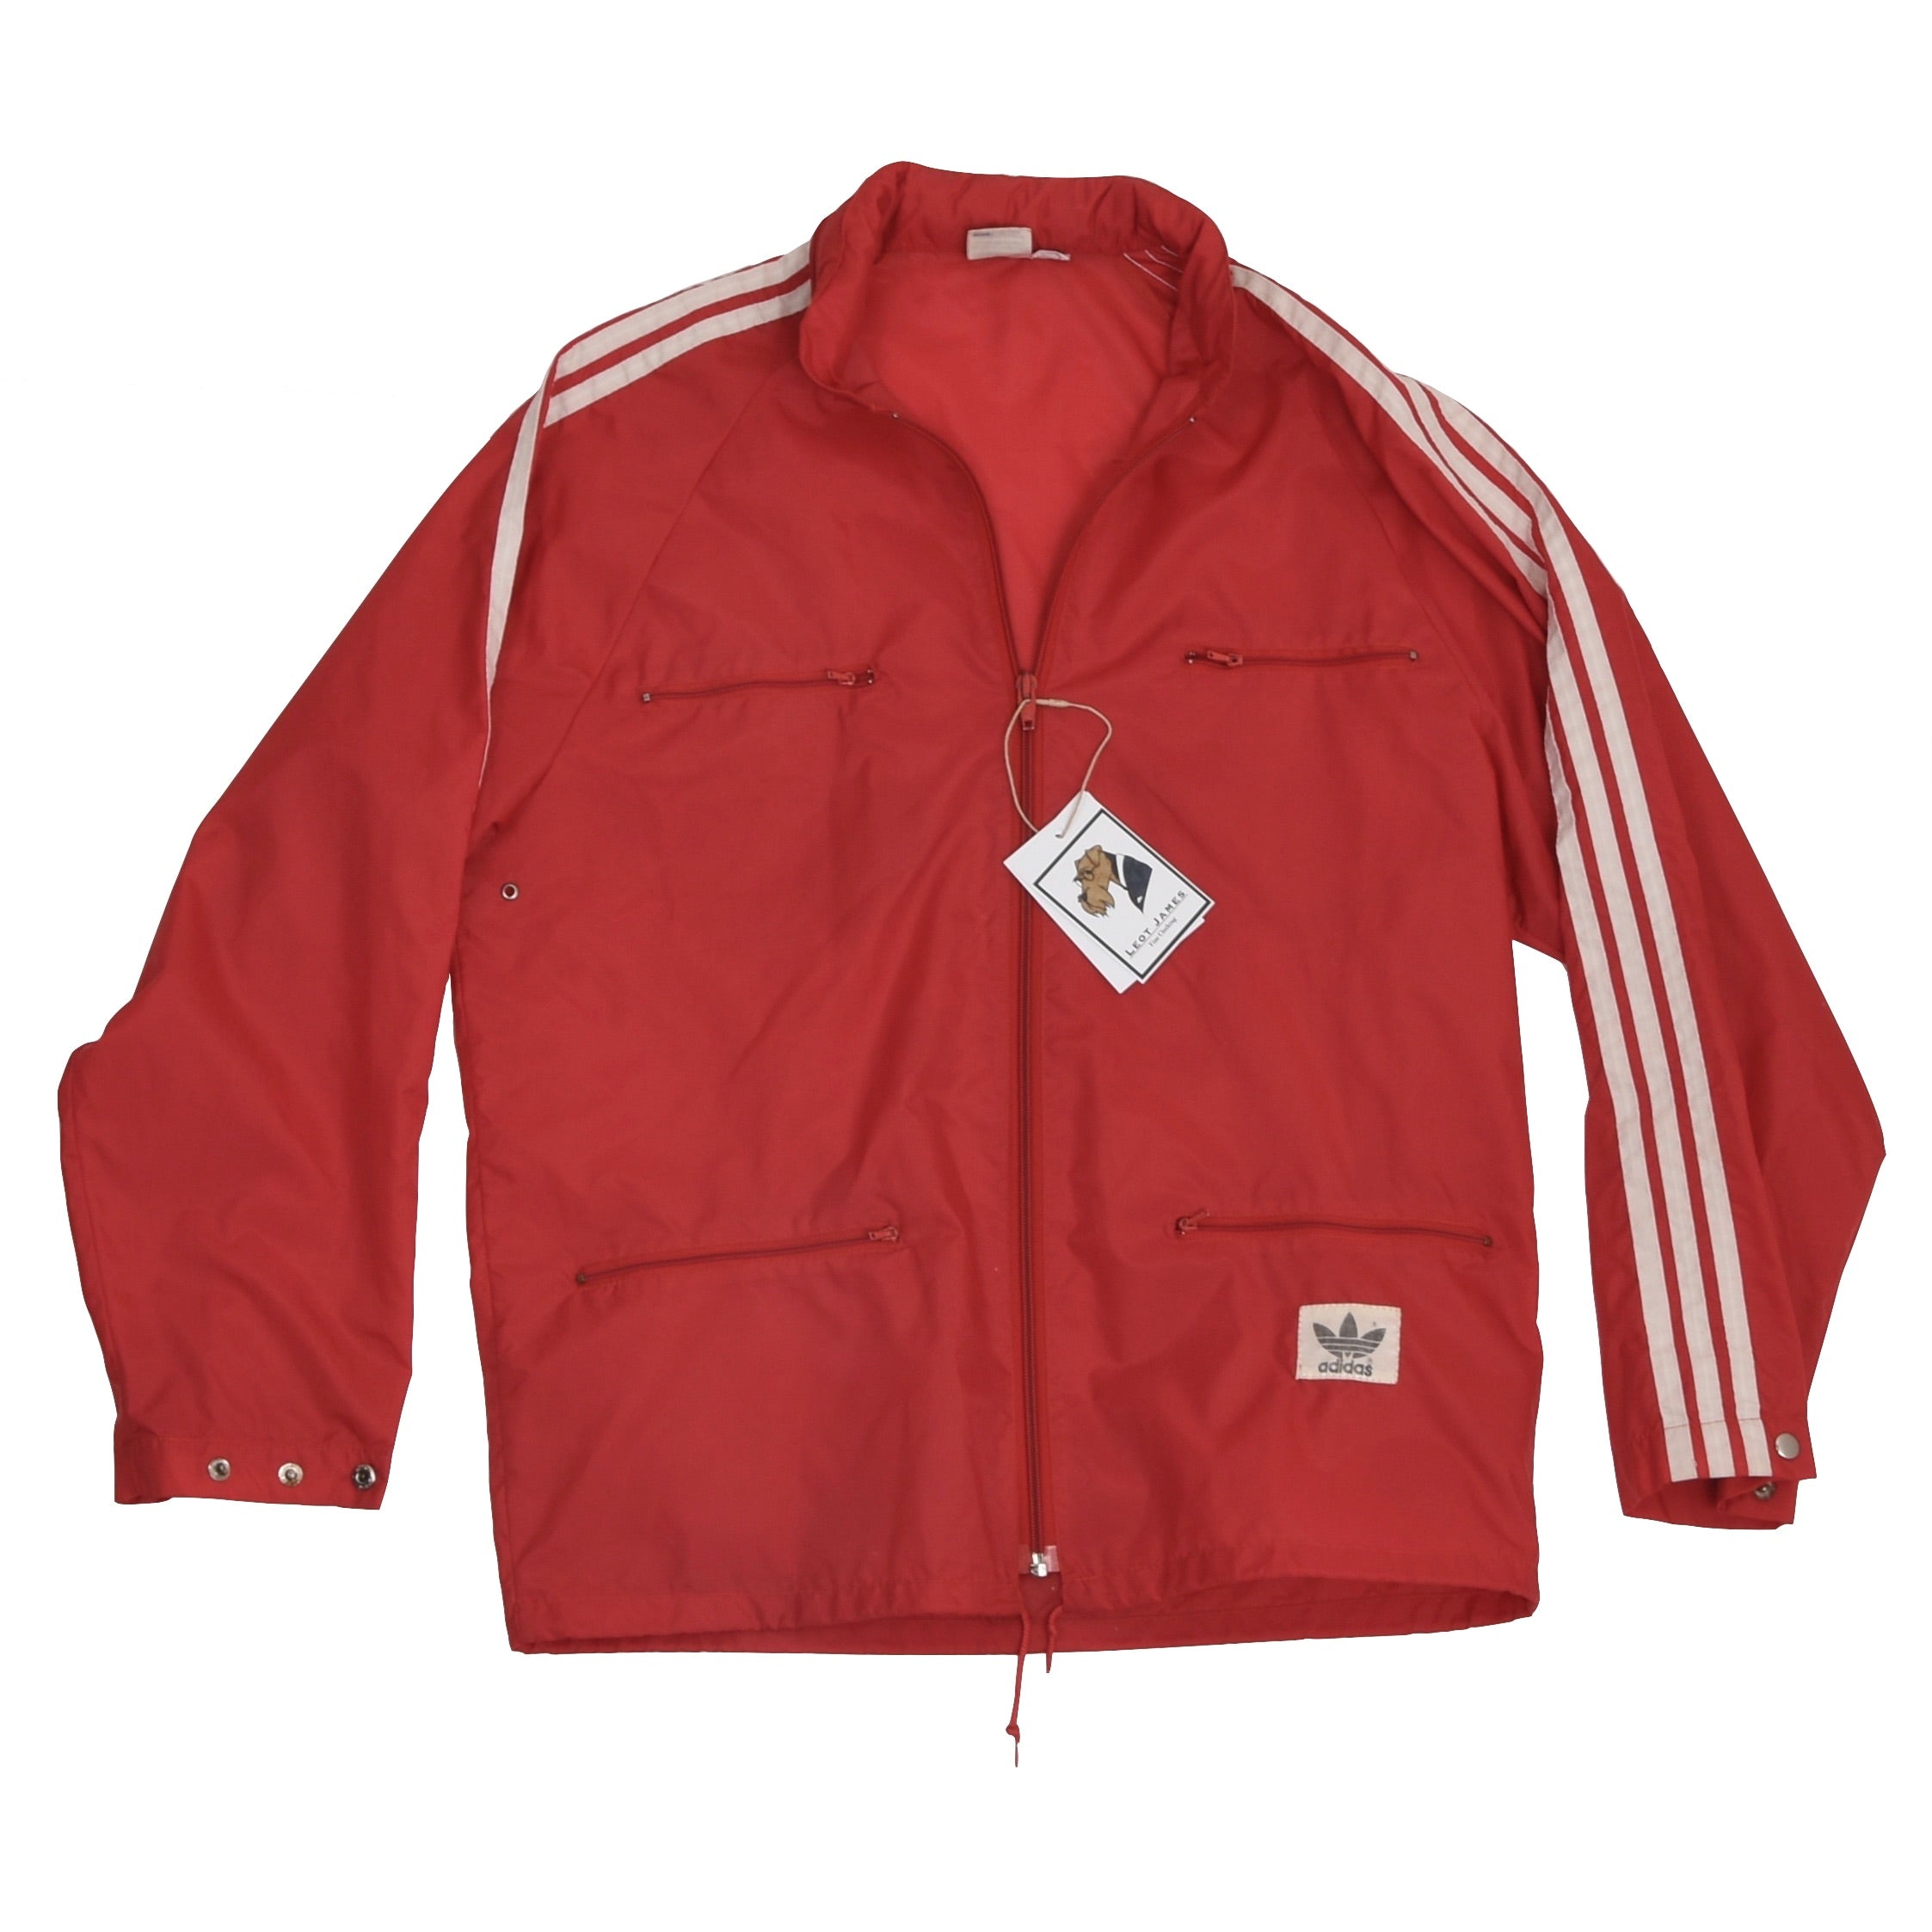 Vintage '70s-'80s Adidas Nylon Rain Jacket Size S 44-46 - Red